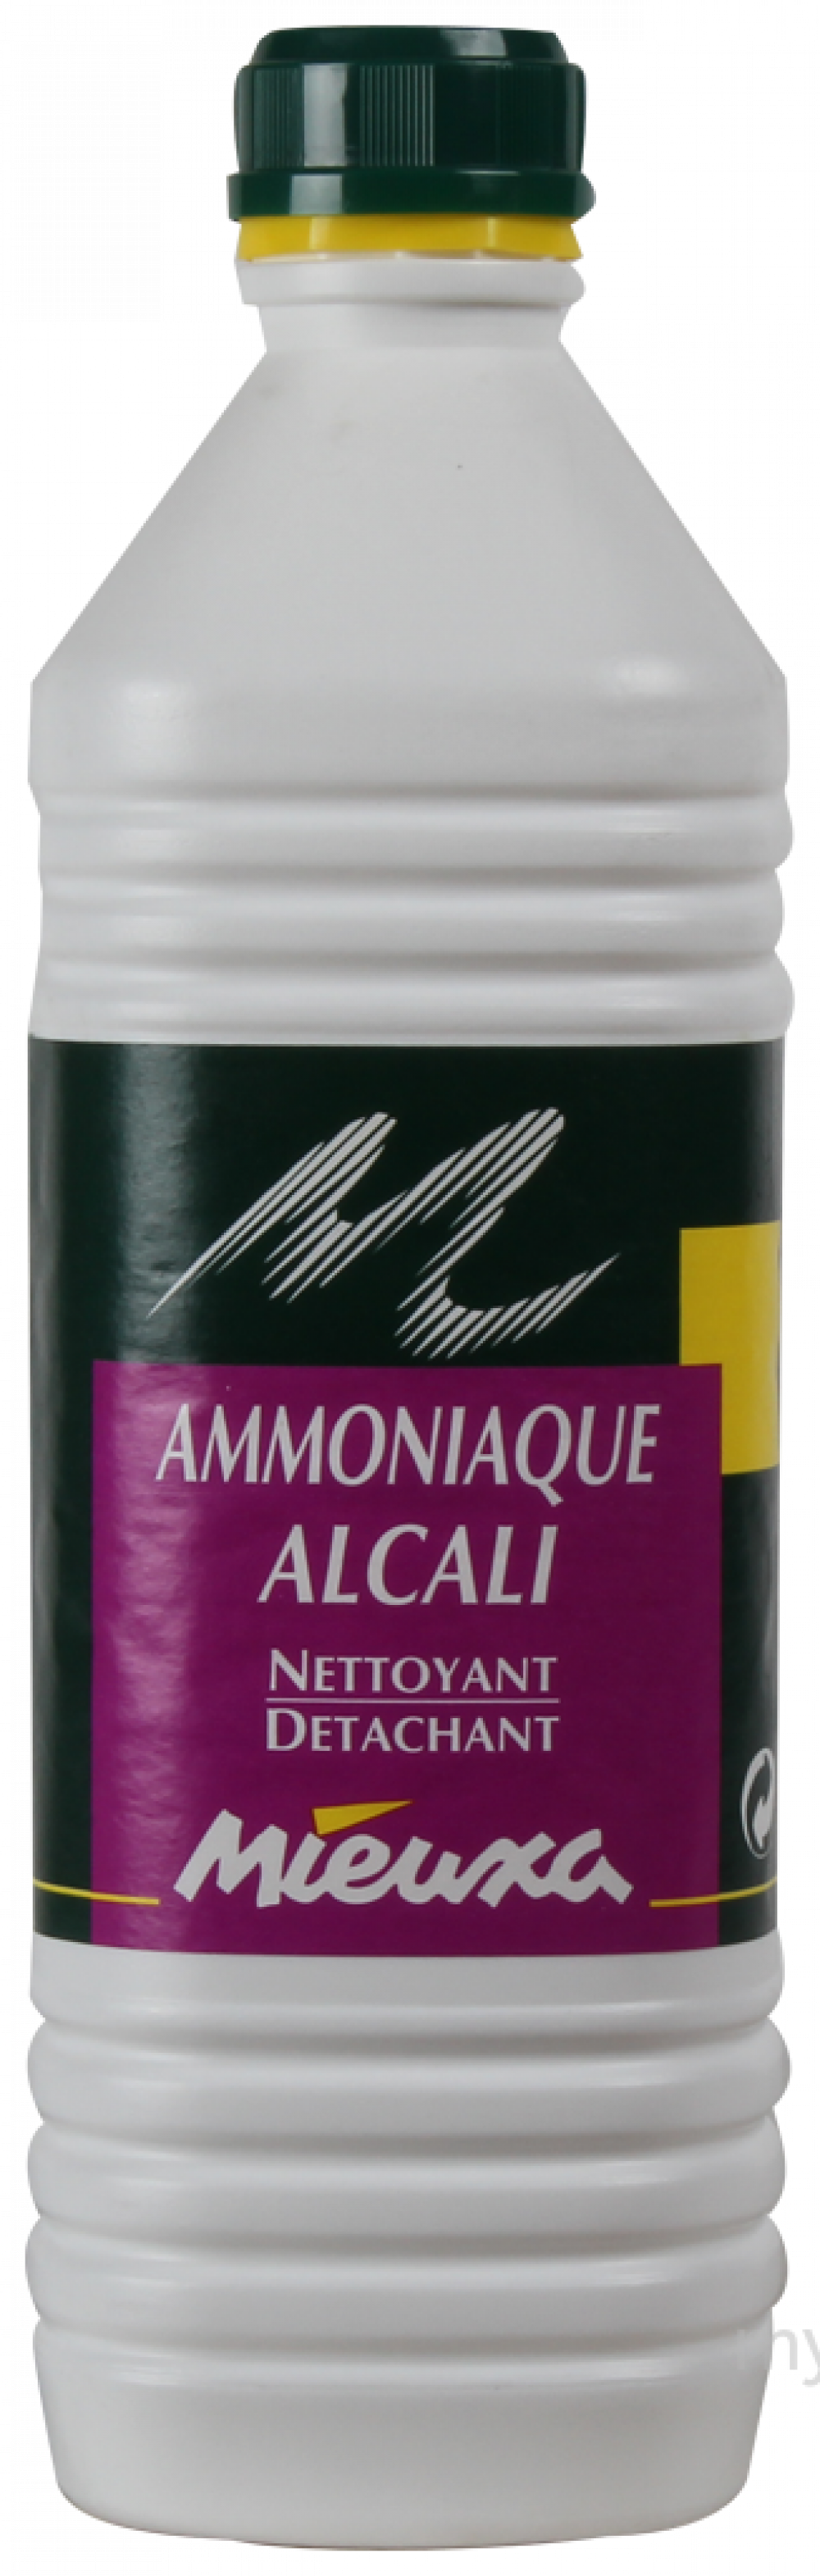 Ammoniaque, acheter de l'ammoniaque liquide Alcali 22°